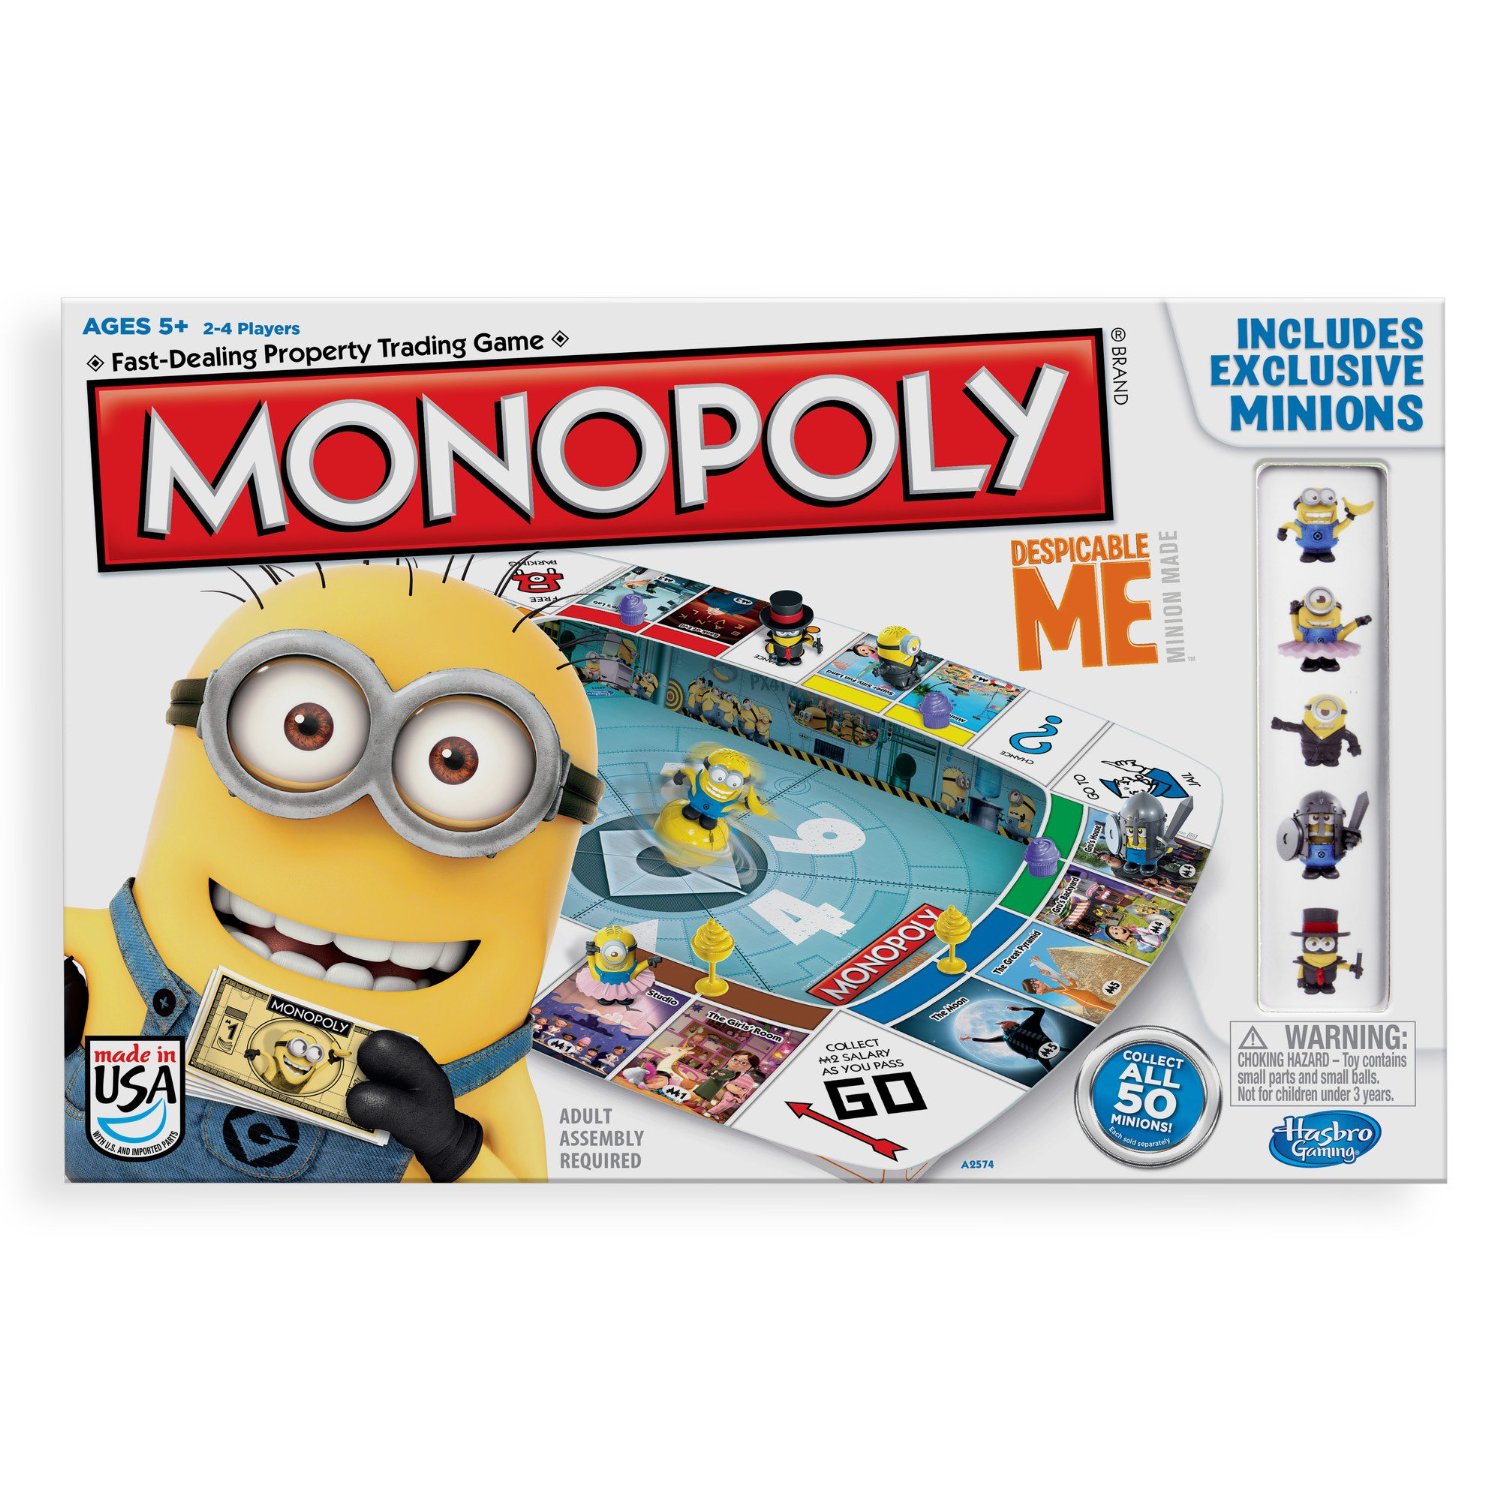 Despicable Me Monopoly 